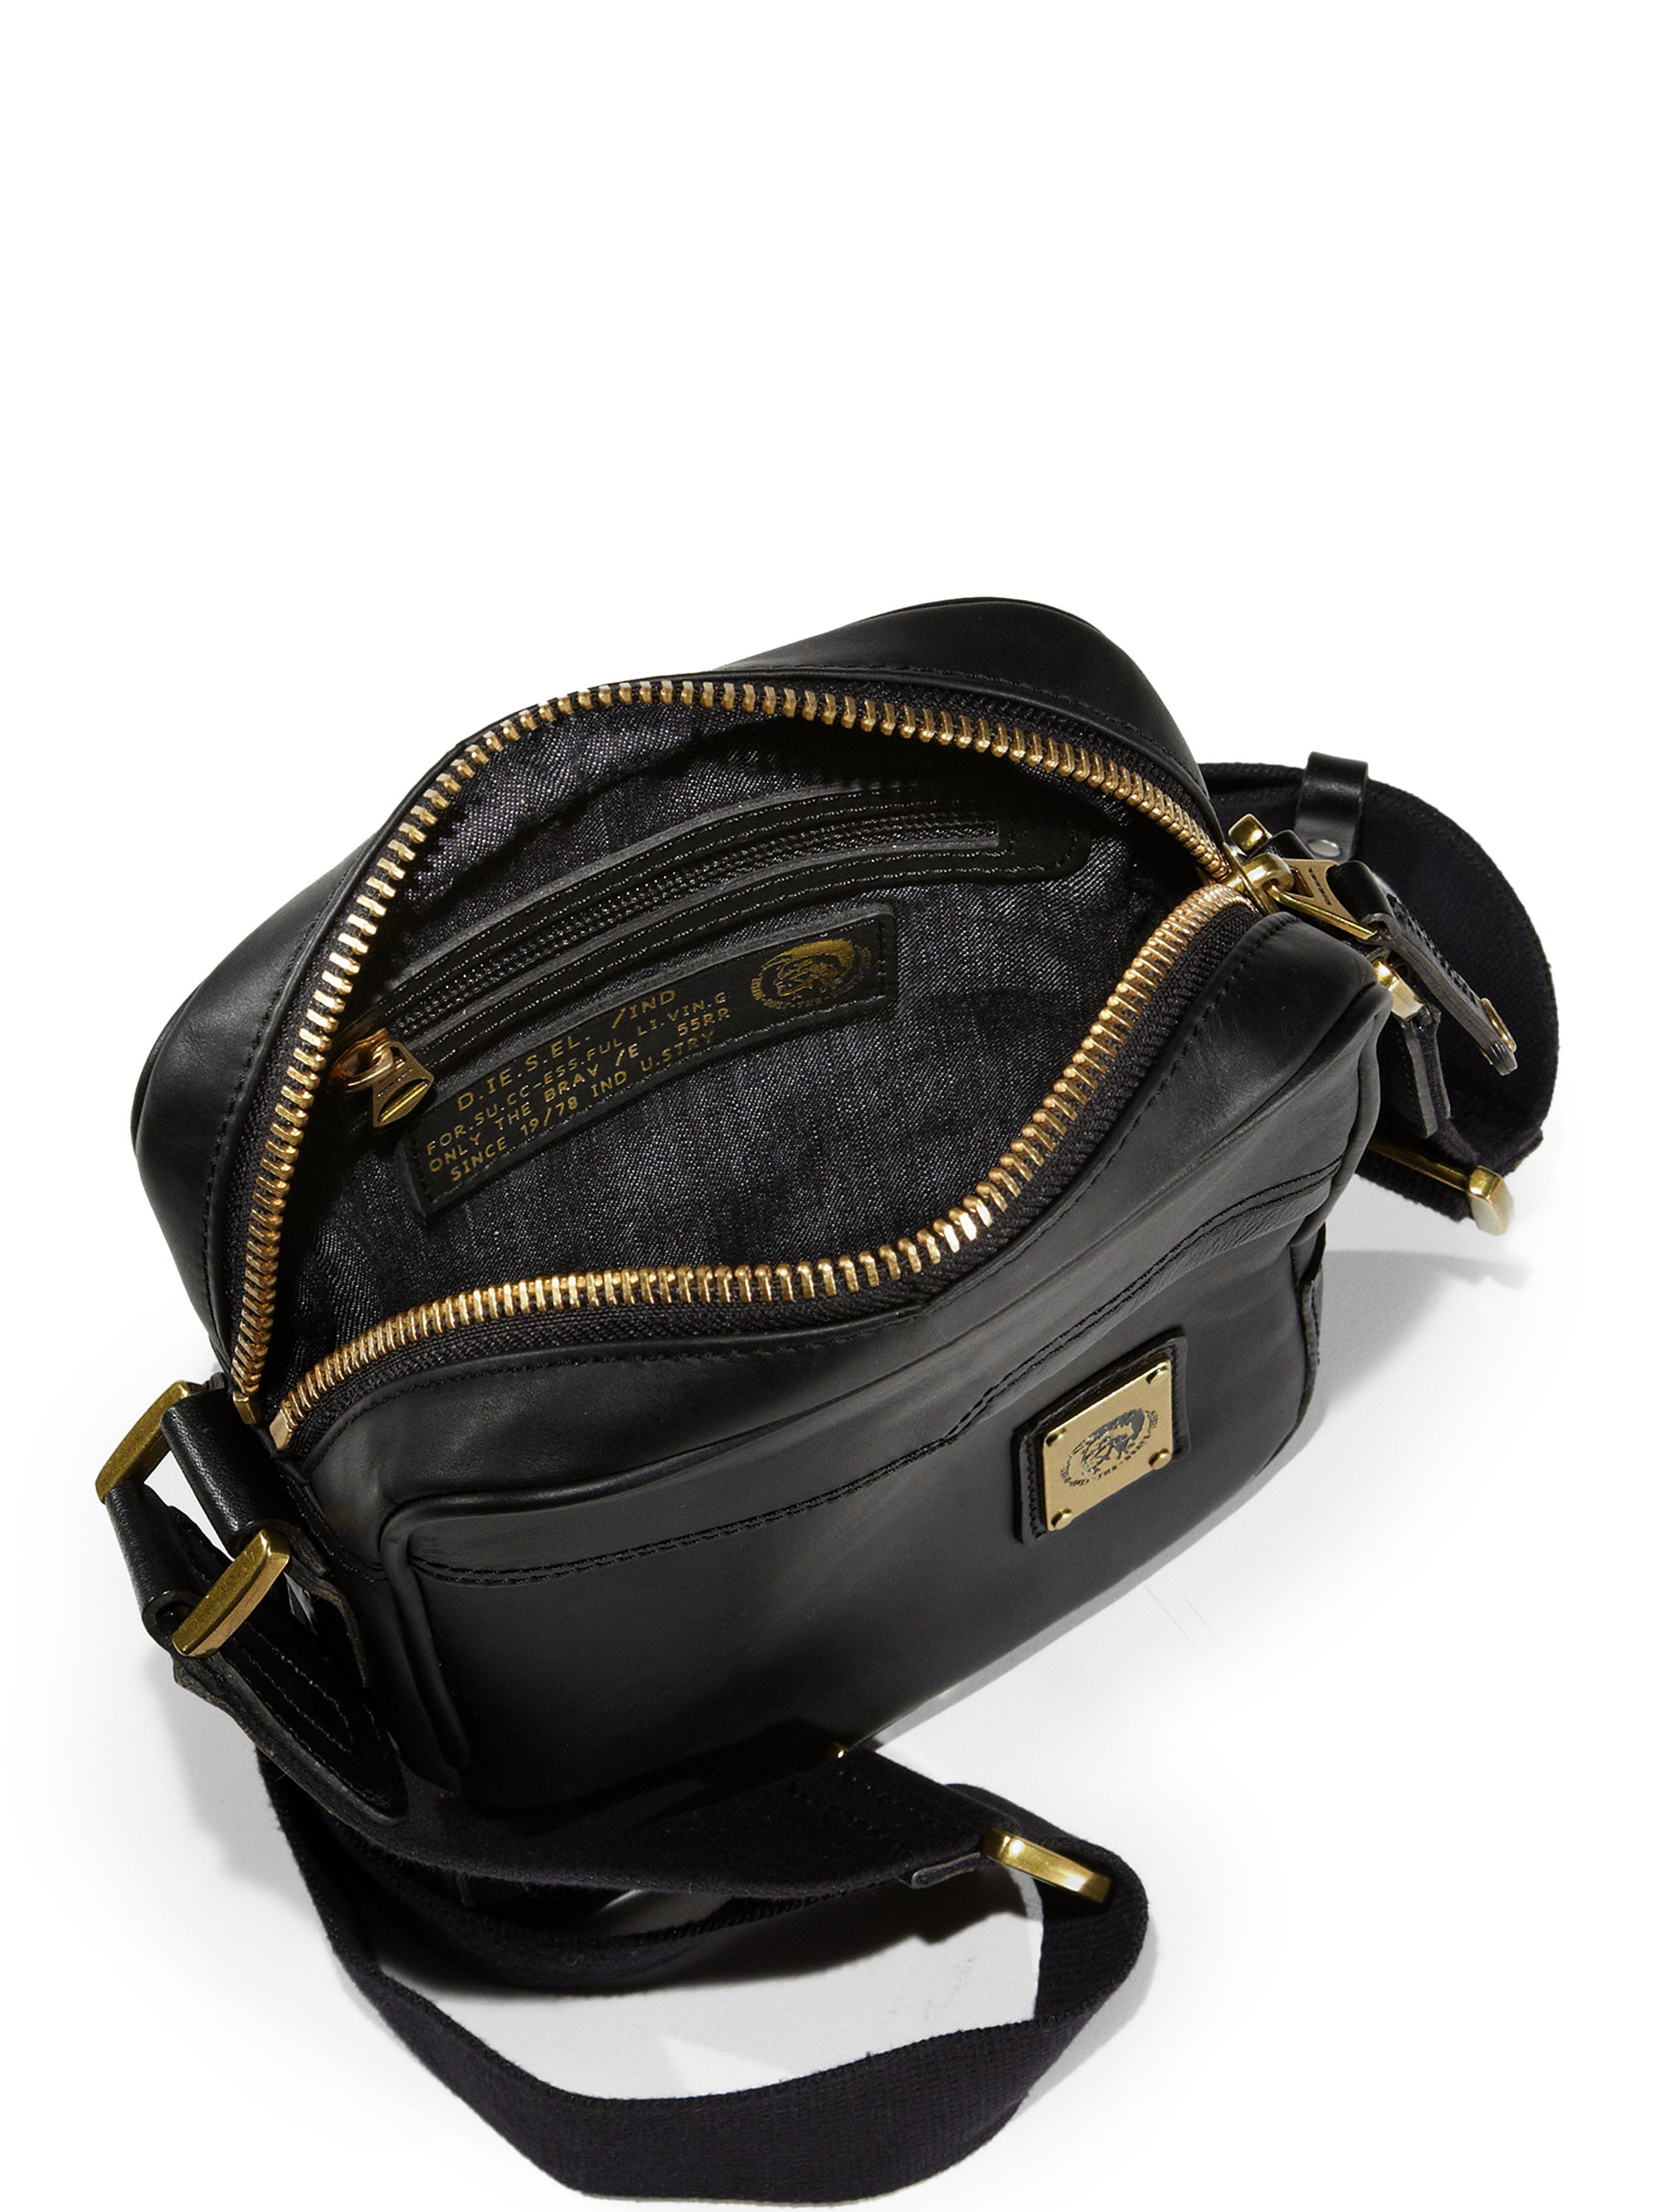 DIESEL Rub & Rock Leather Crossbody Bag in Black for Men - Lyst